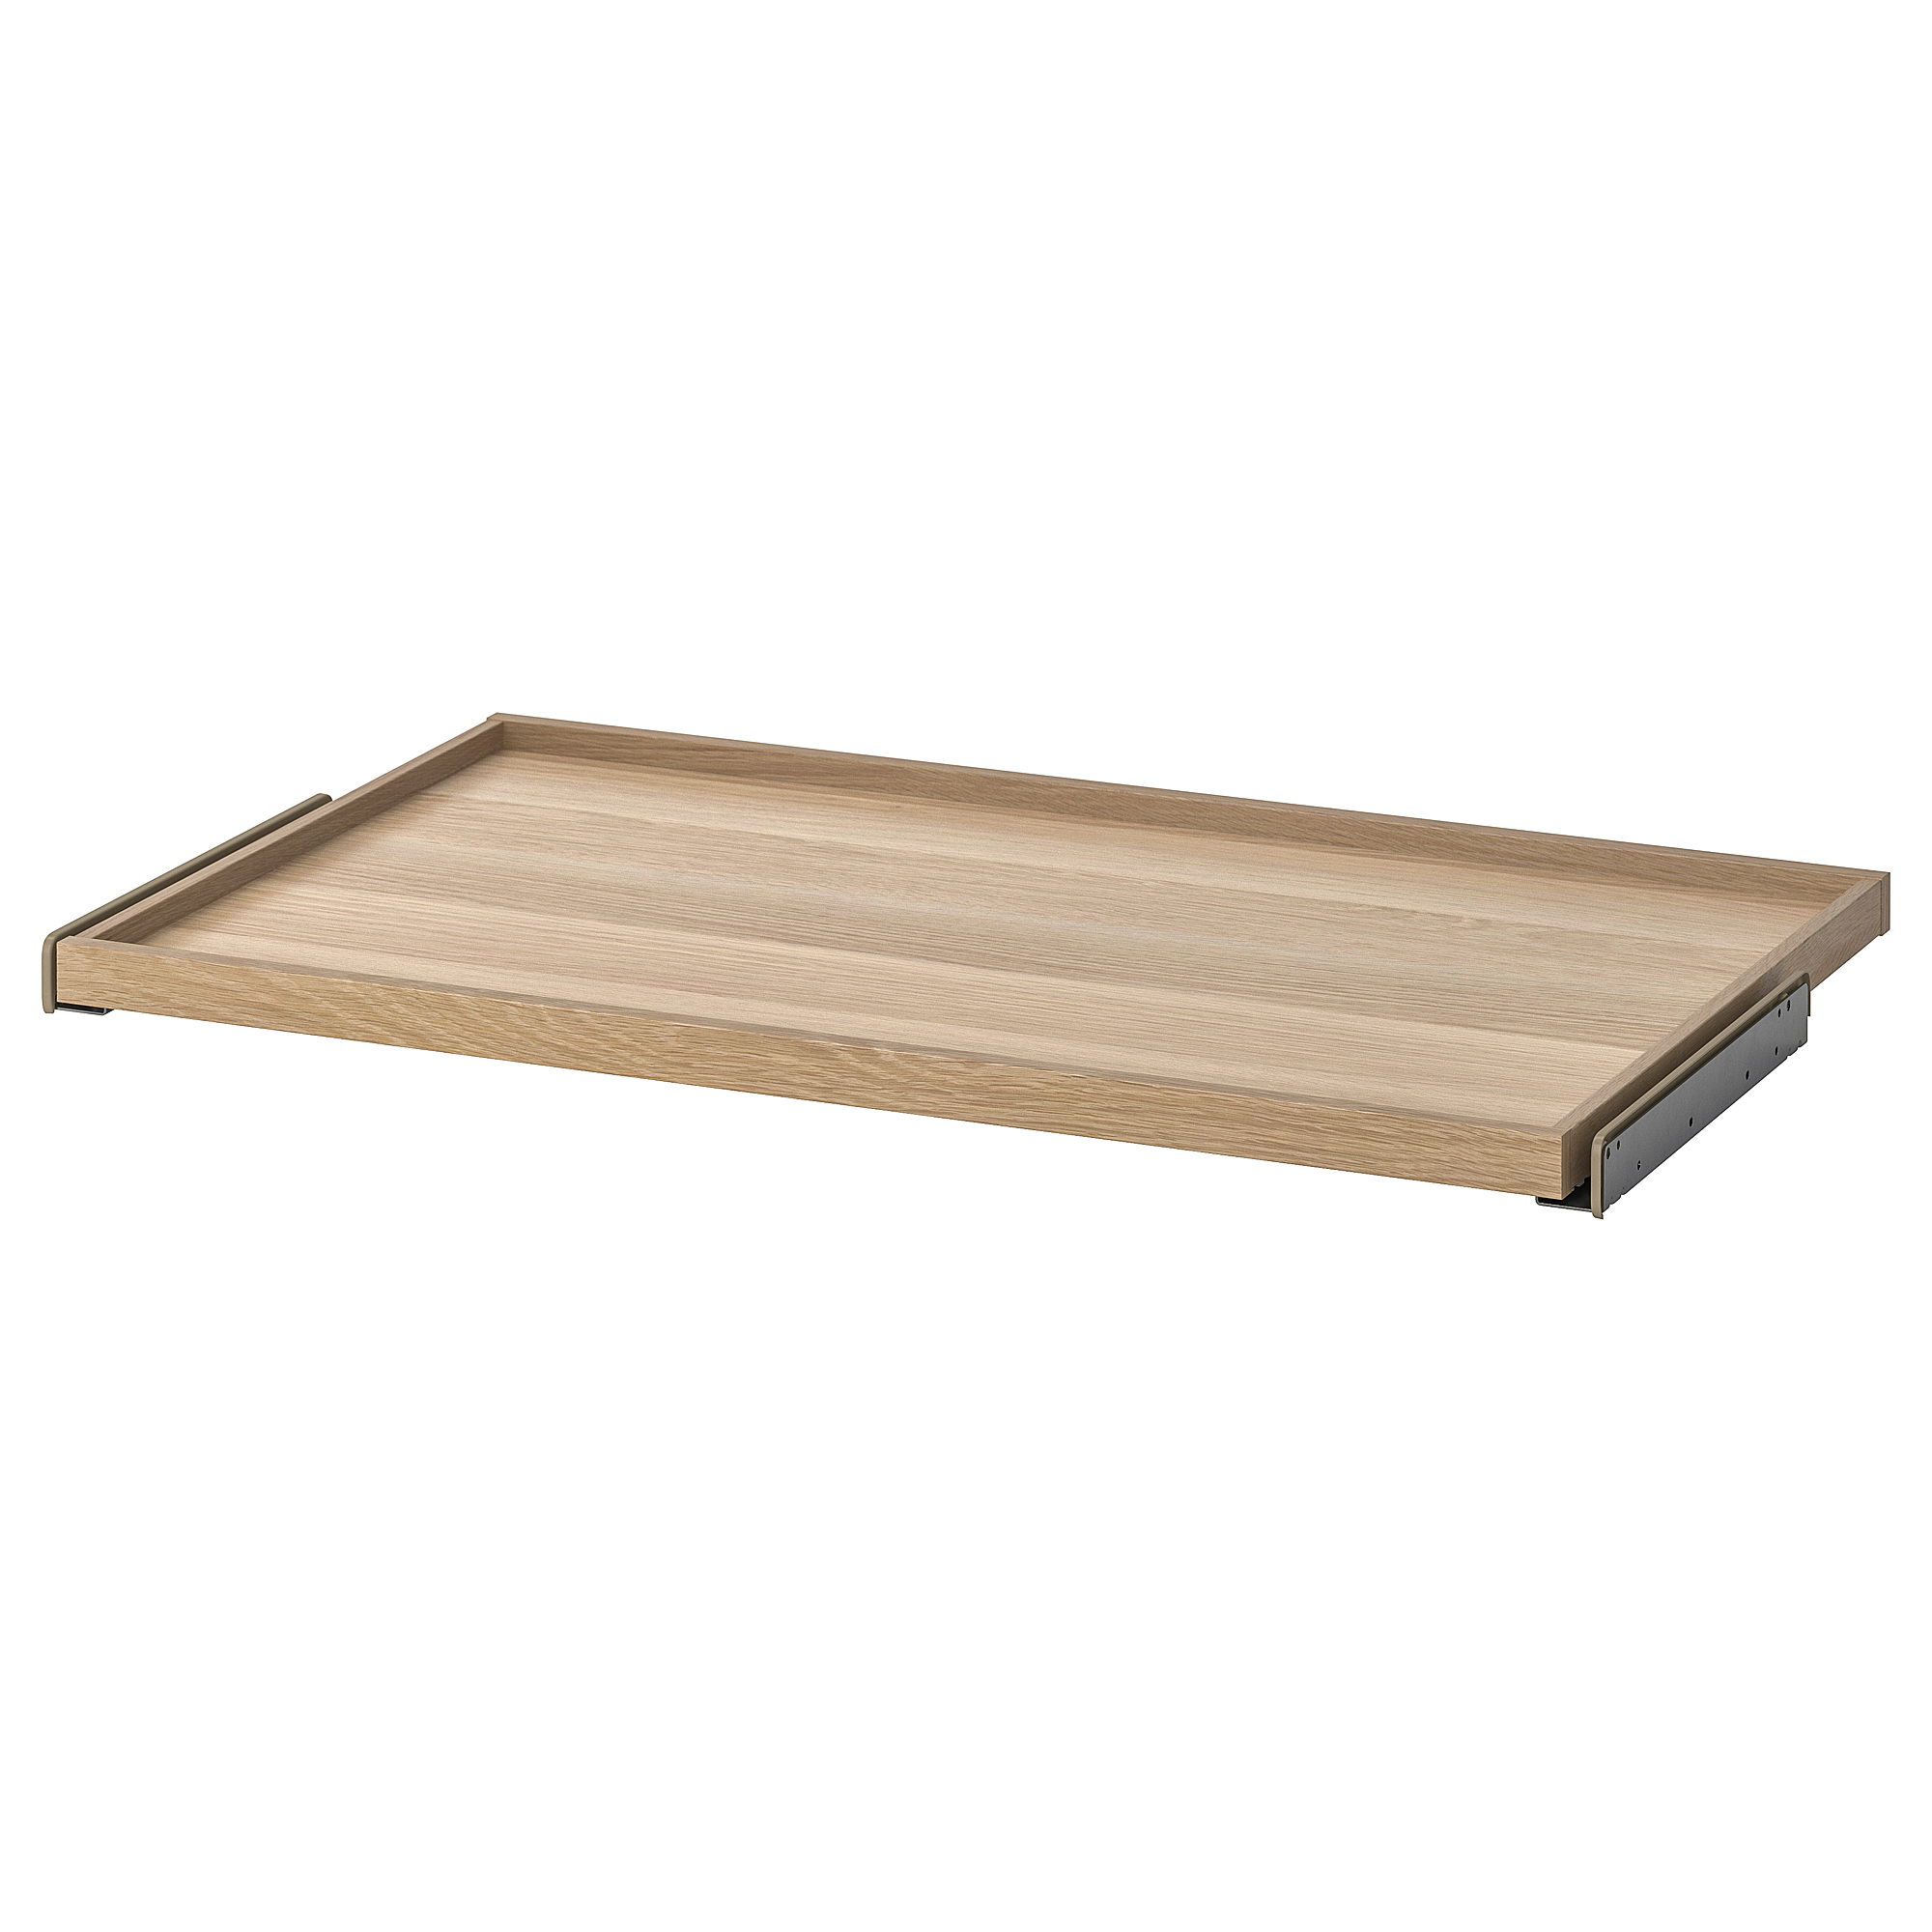 KOMPLEMENT - 外拉式收納盤, 染白橡木紋, 96.5x56.3x3.5 公分| IKEA 